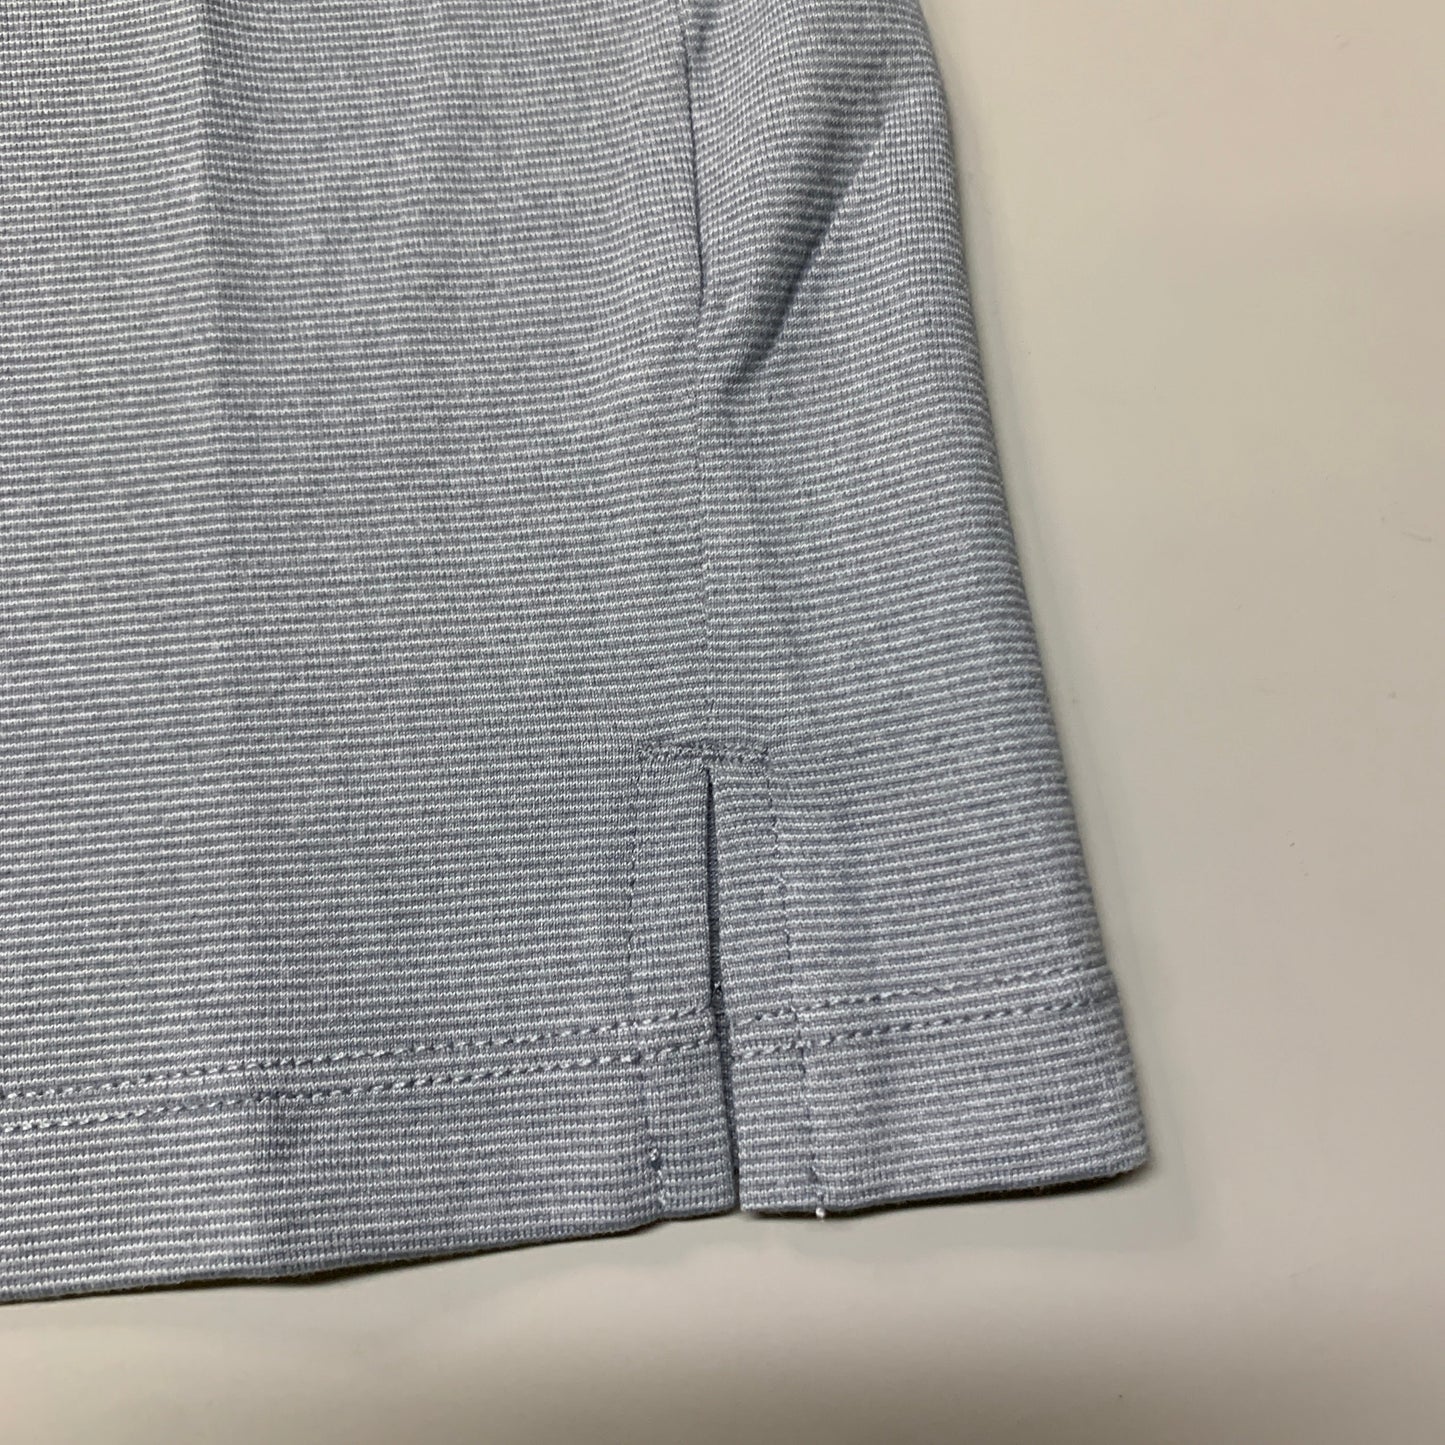 NATHAN Dash Tee Short Sleeve Shirt Monument Grey Stripe SZ XL NS50920-80130-XL